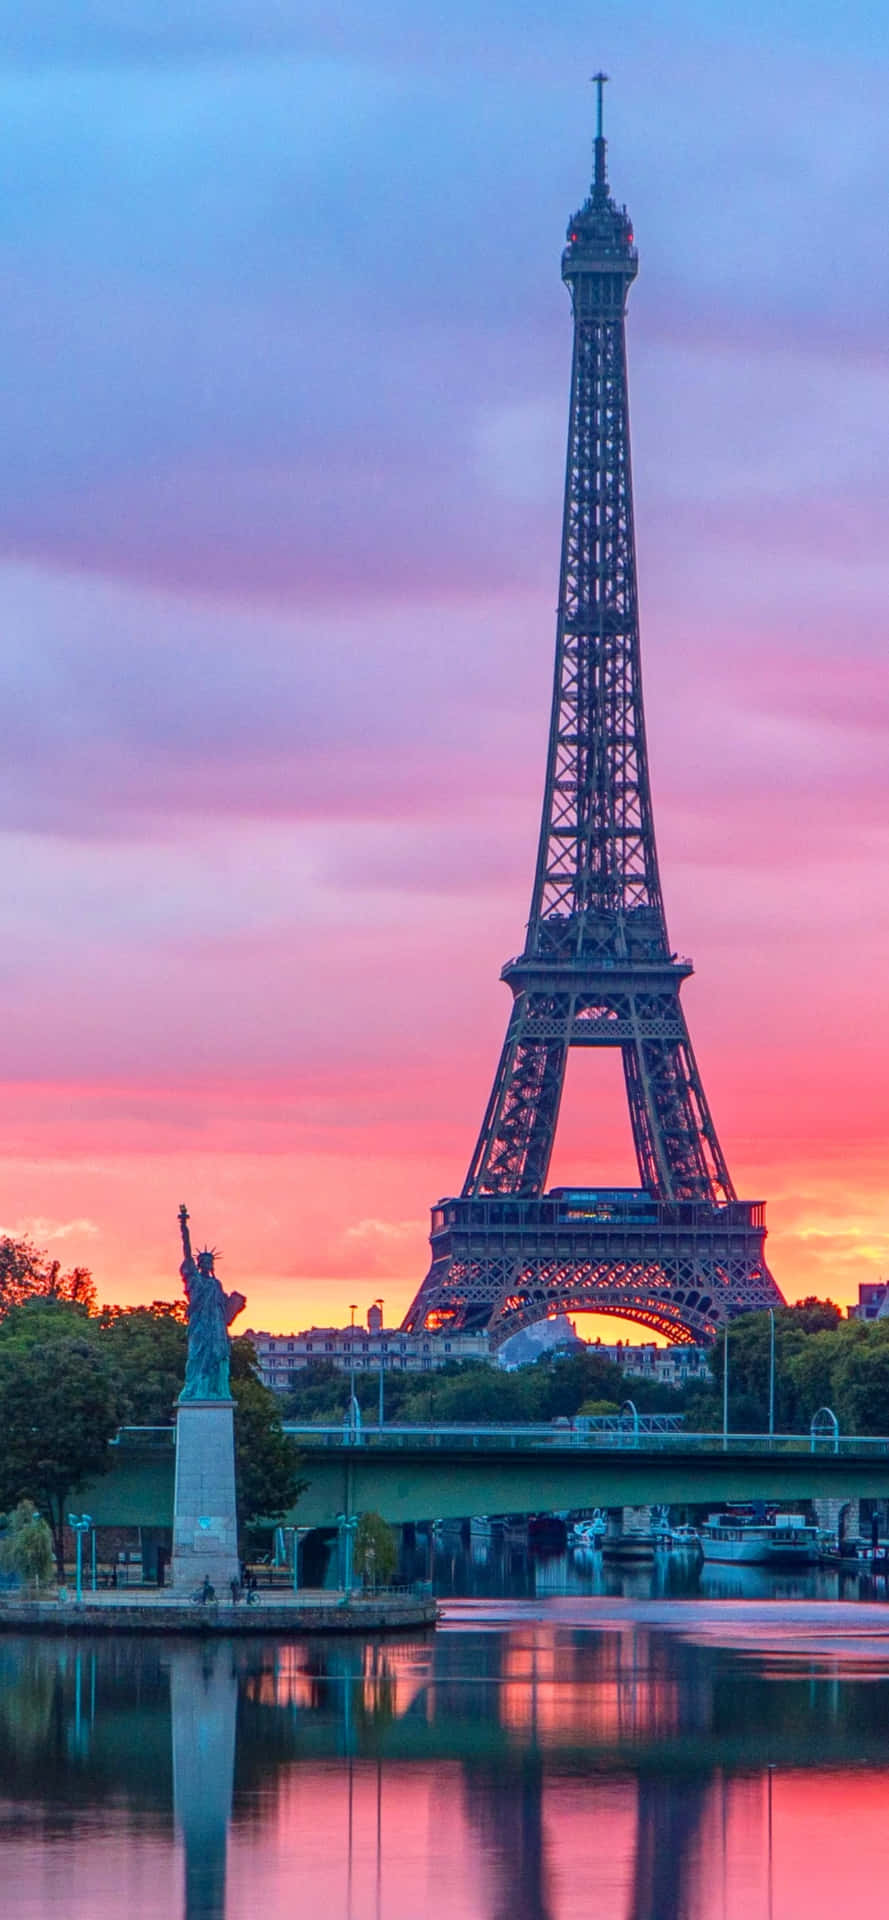 The beautiful city of Paris, France.